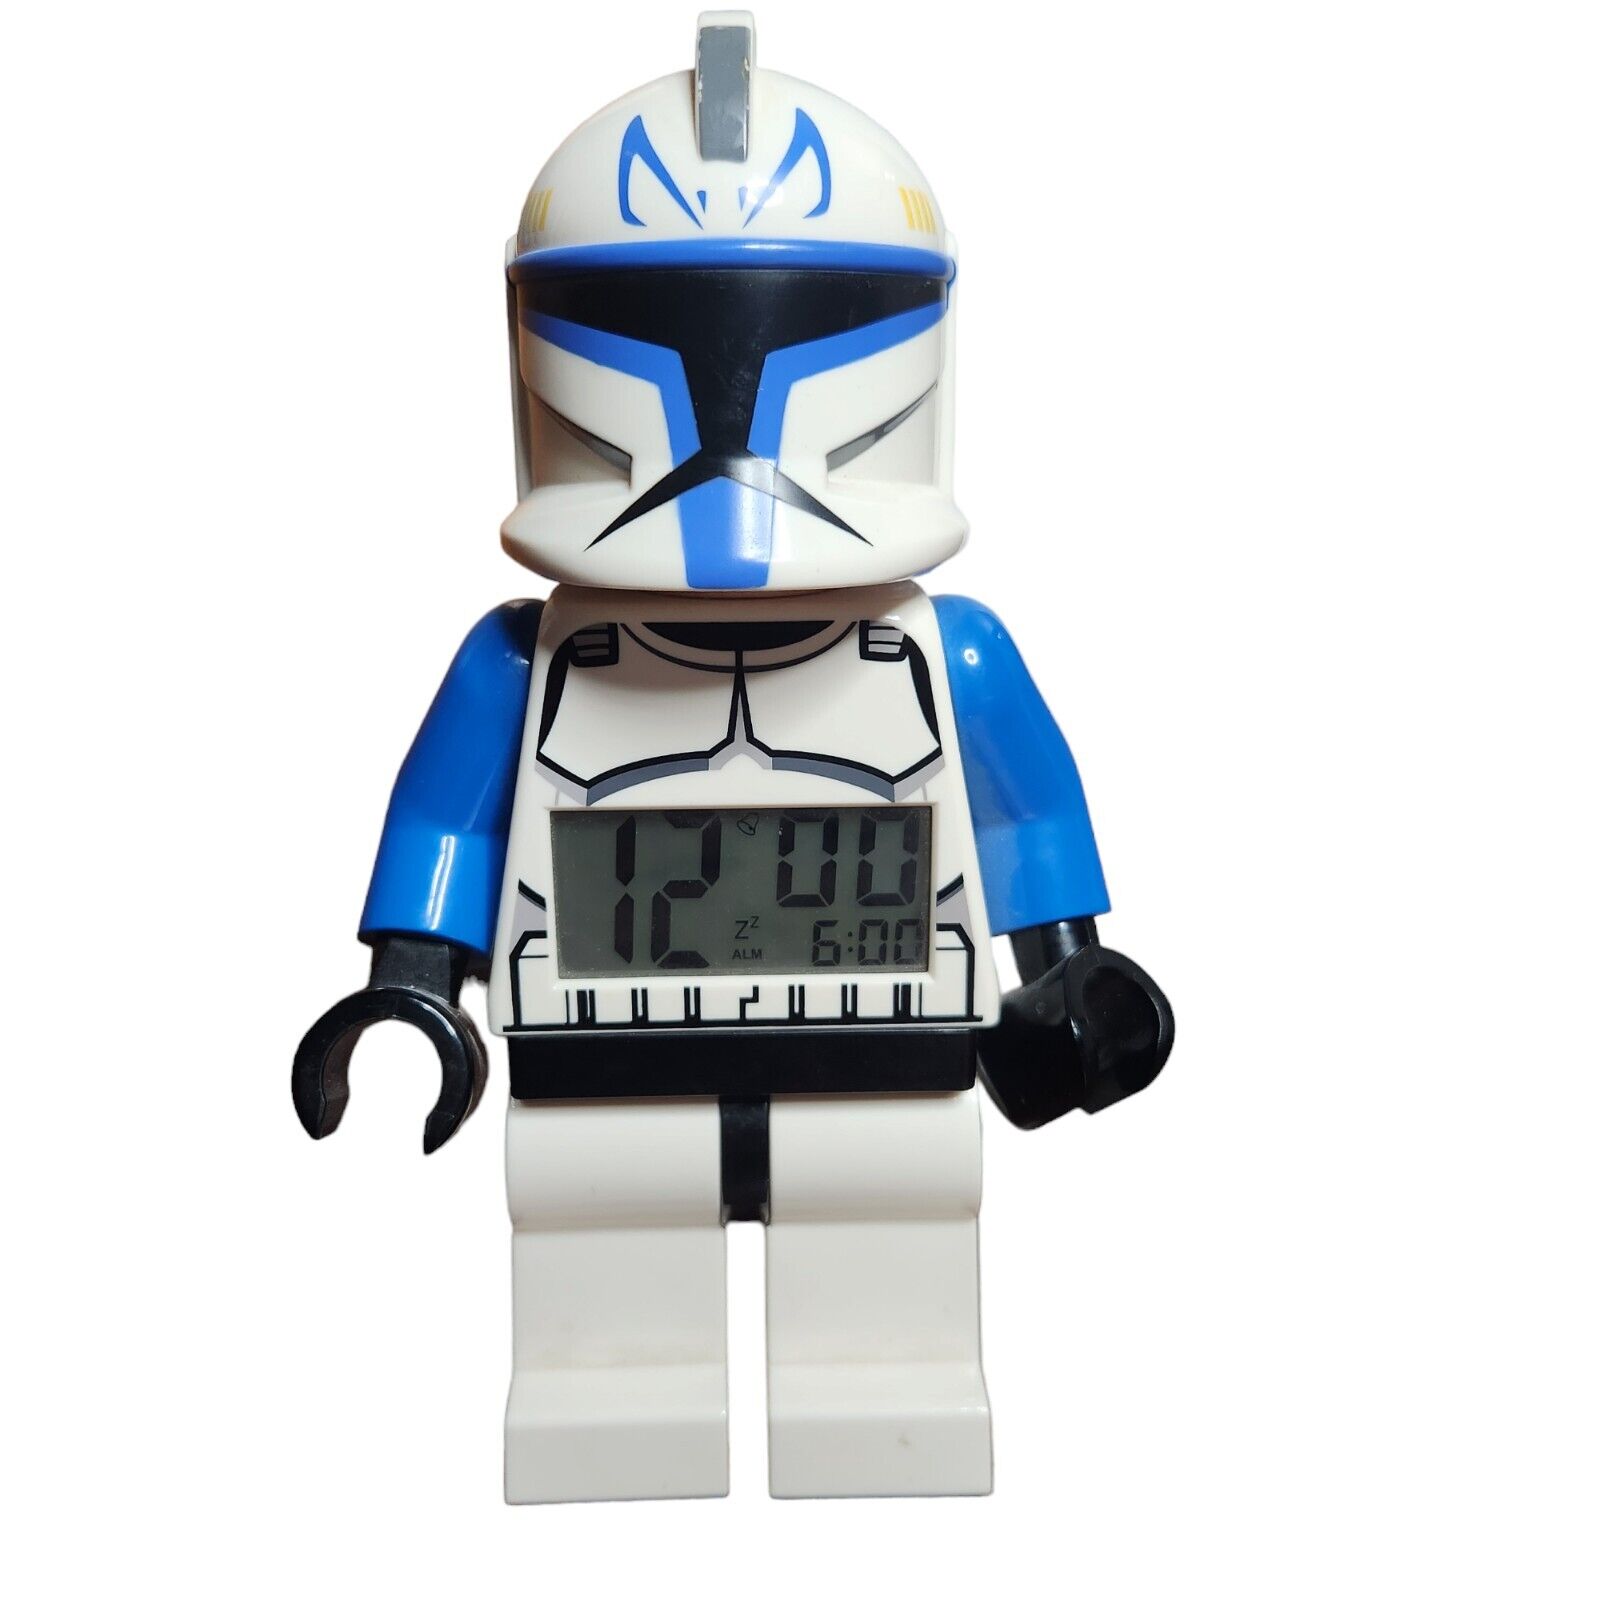 Lego Star Wars Captain Rex 2011 Mini Figure Alarm Clock - Working